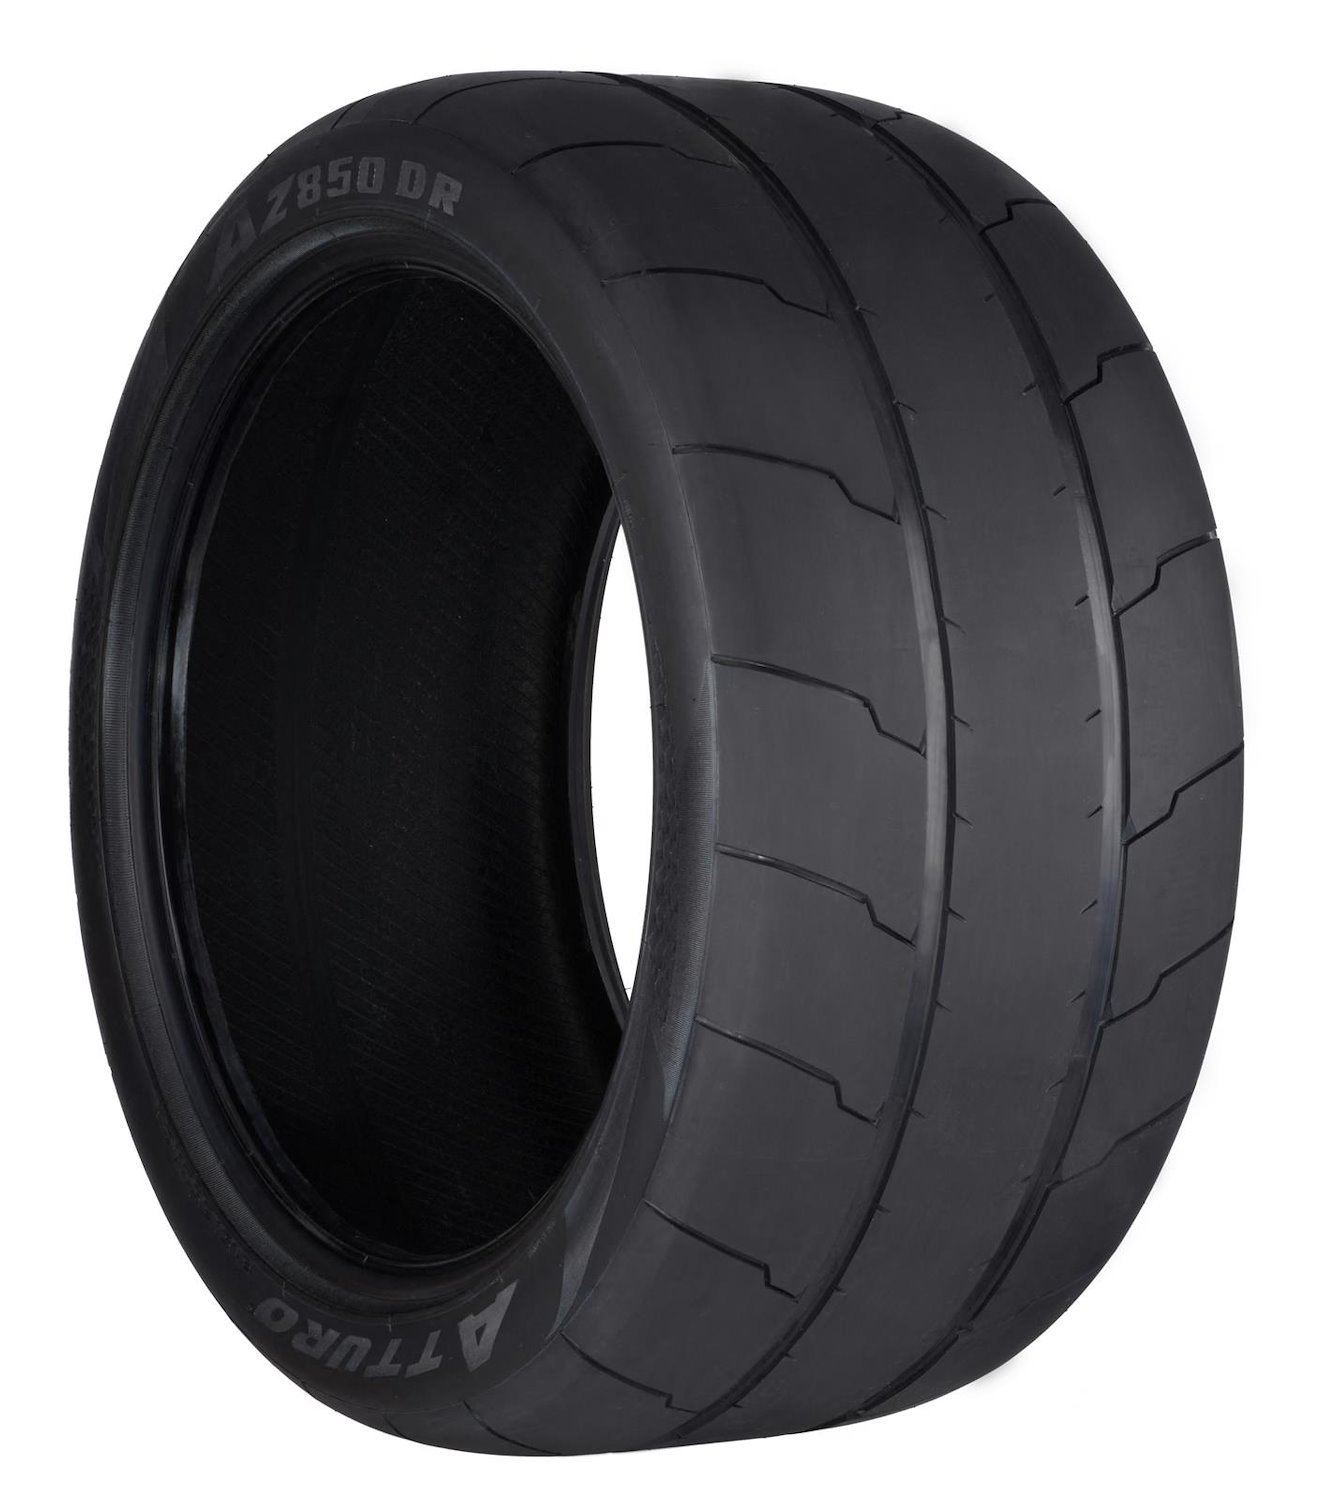 AZ 850 DR Drag Radial Tire, 275/40R20